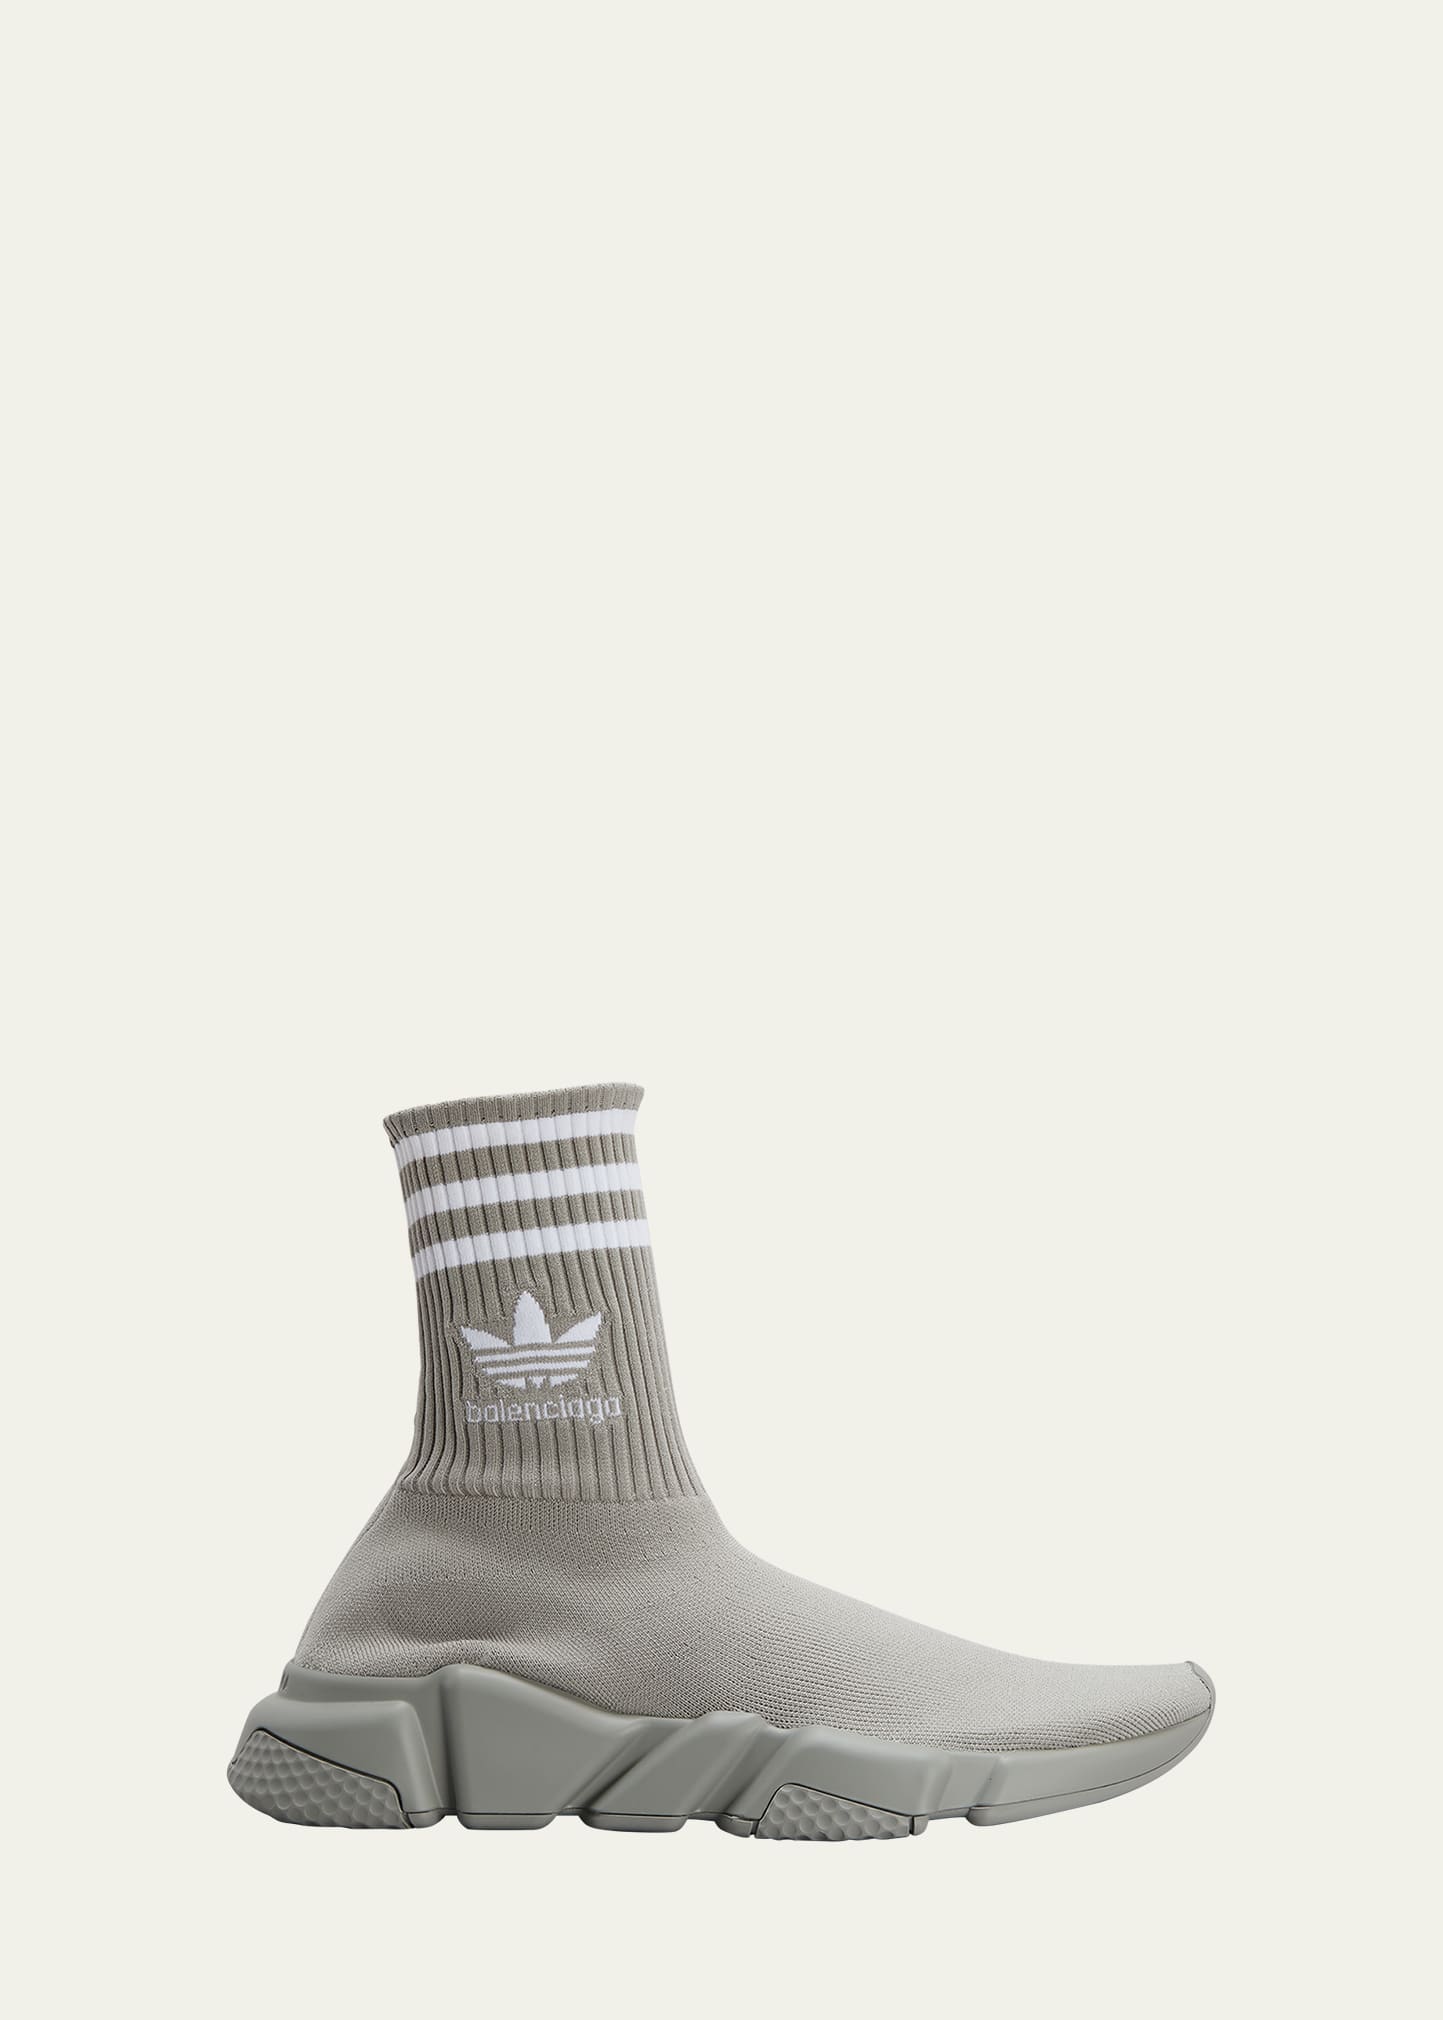 Balenciaga x Adidas Speed Sock Sneakers